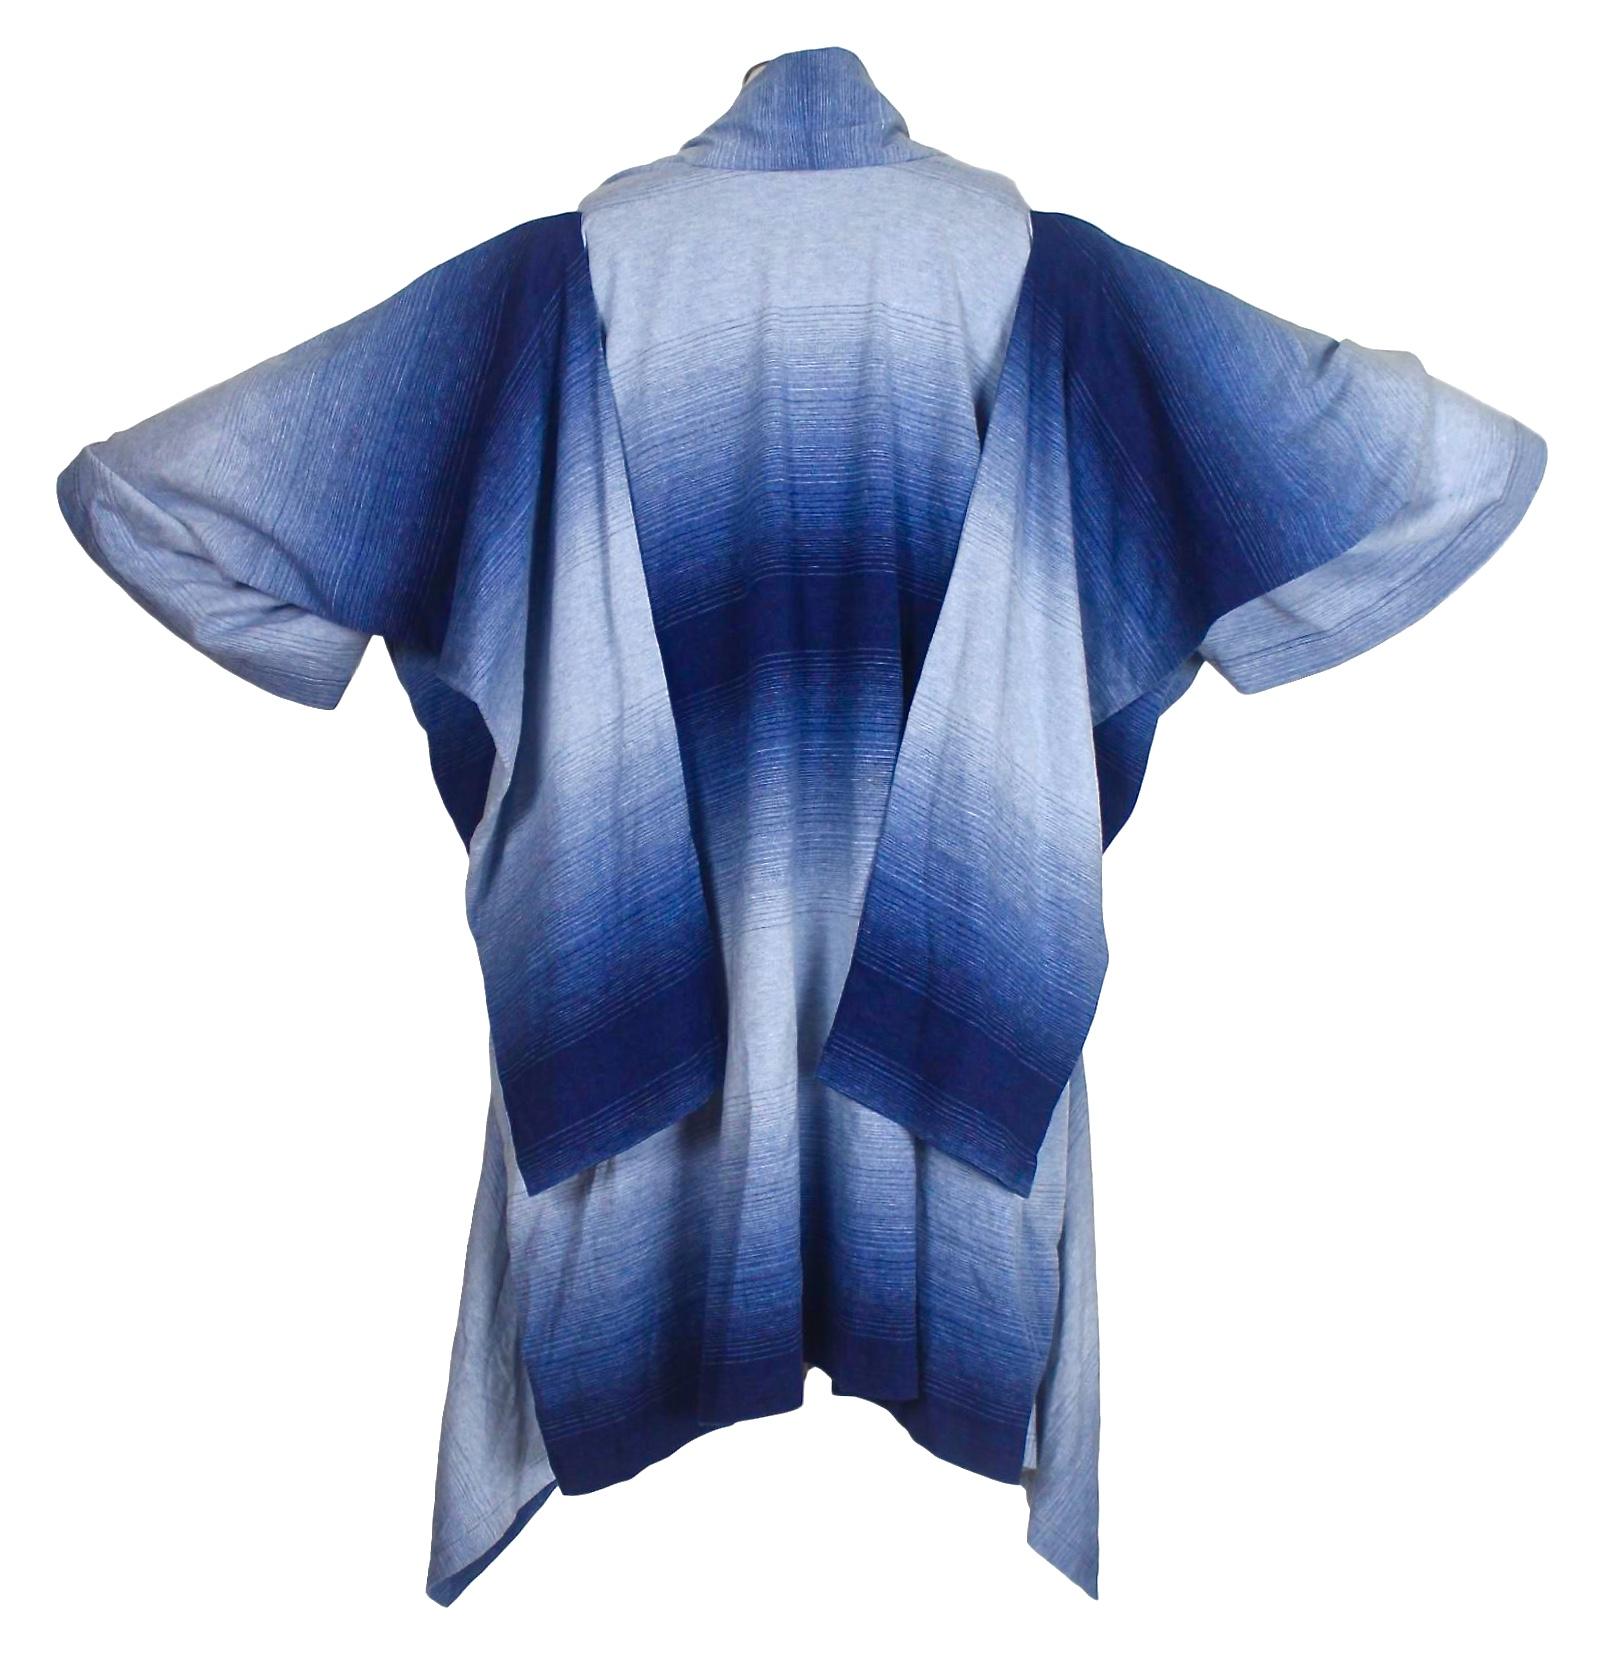 Vintage 1980s Issey Miyake Jacket
Kimono Split Long and Short Sleeve
Labelled size M